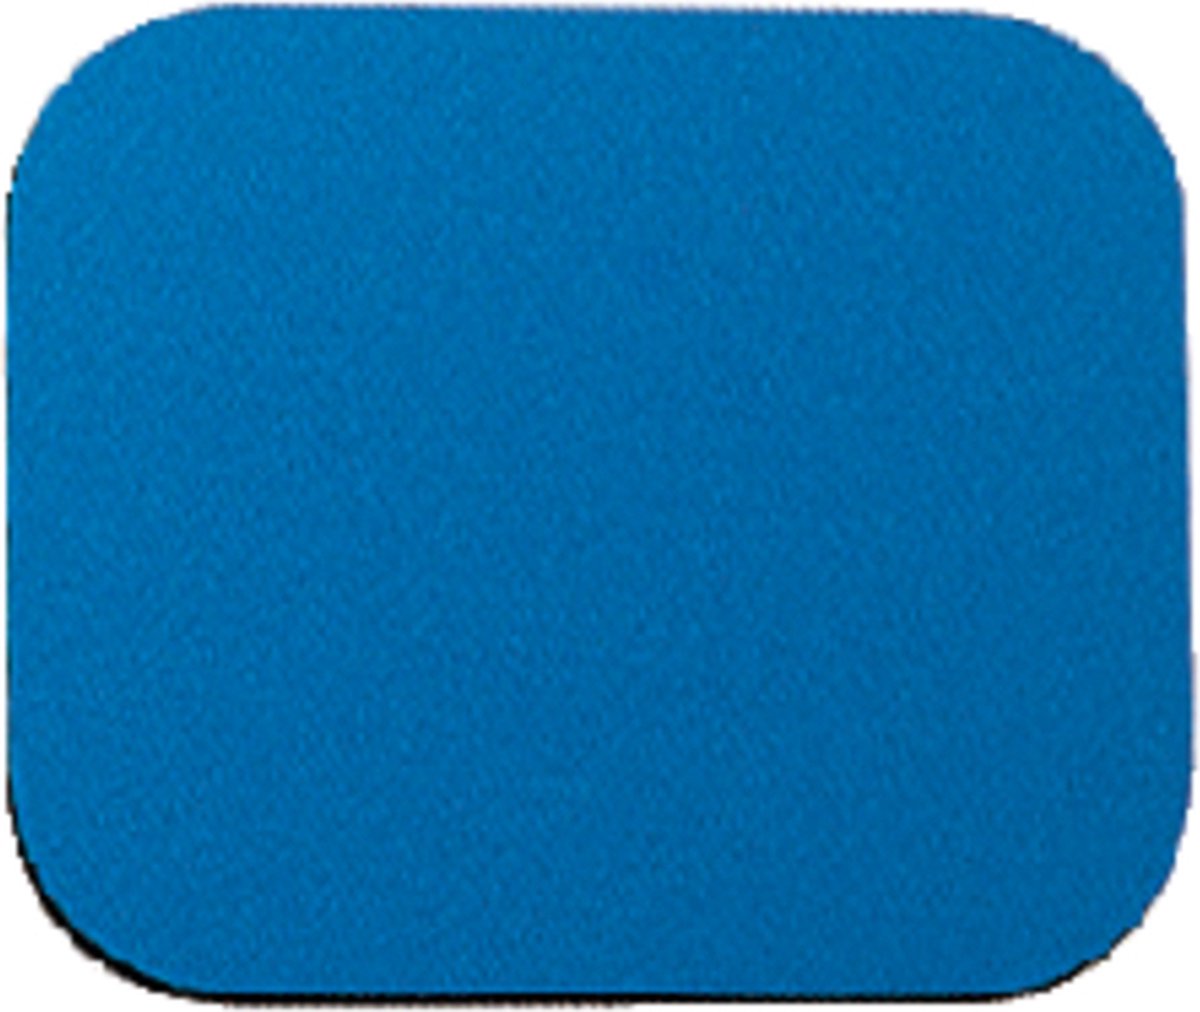 Muismat Quantore 230x190x6mm blauw - Quantore